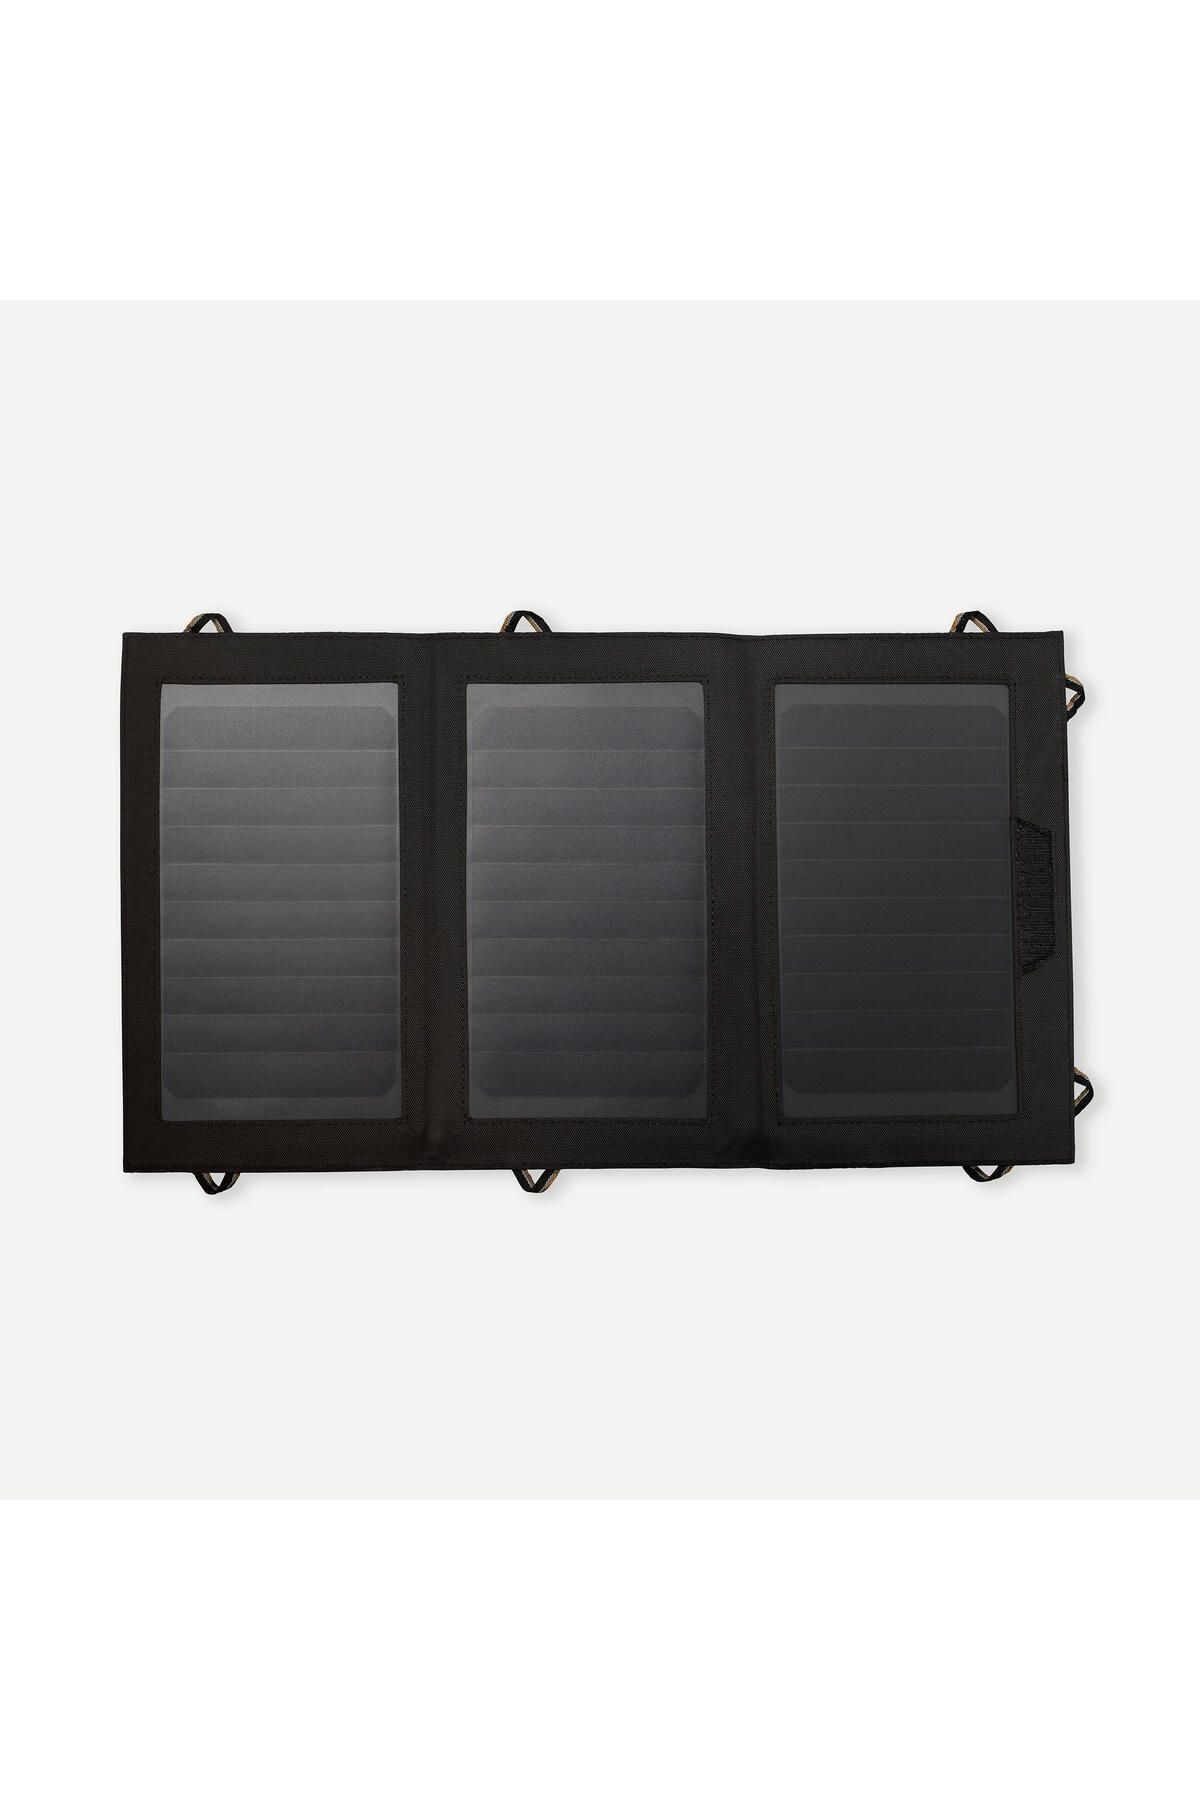 Decathlon USB Güneş Paneli - 15W - SLR900 V2 345095